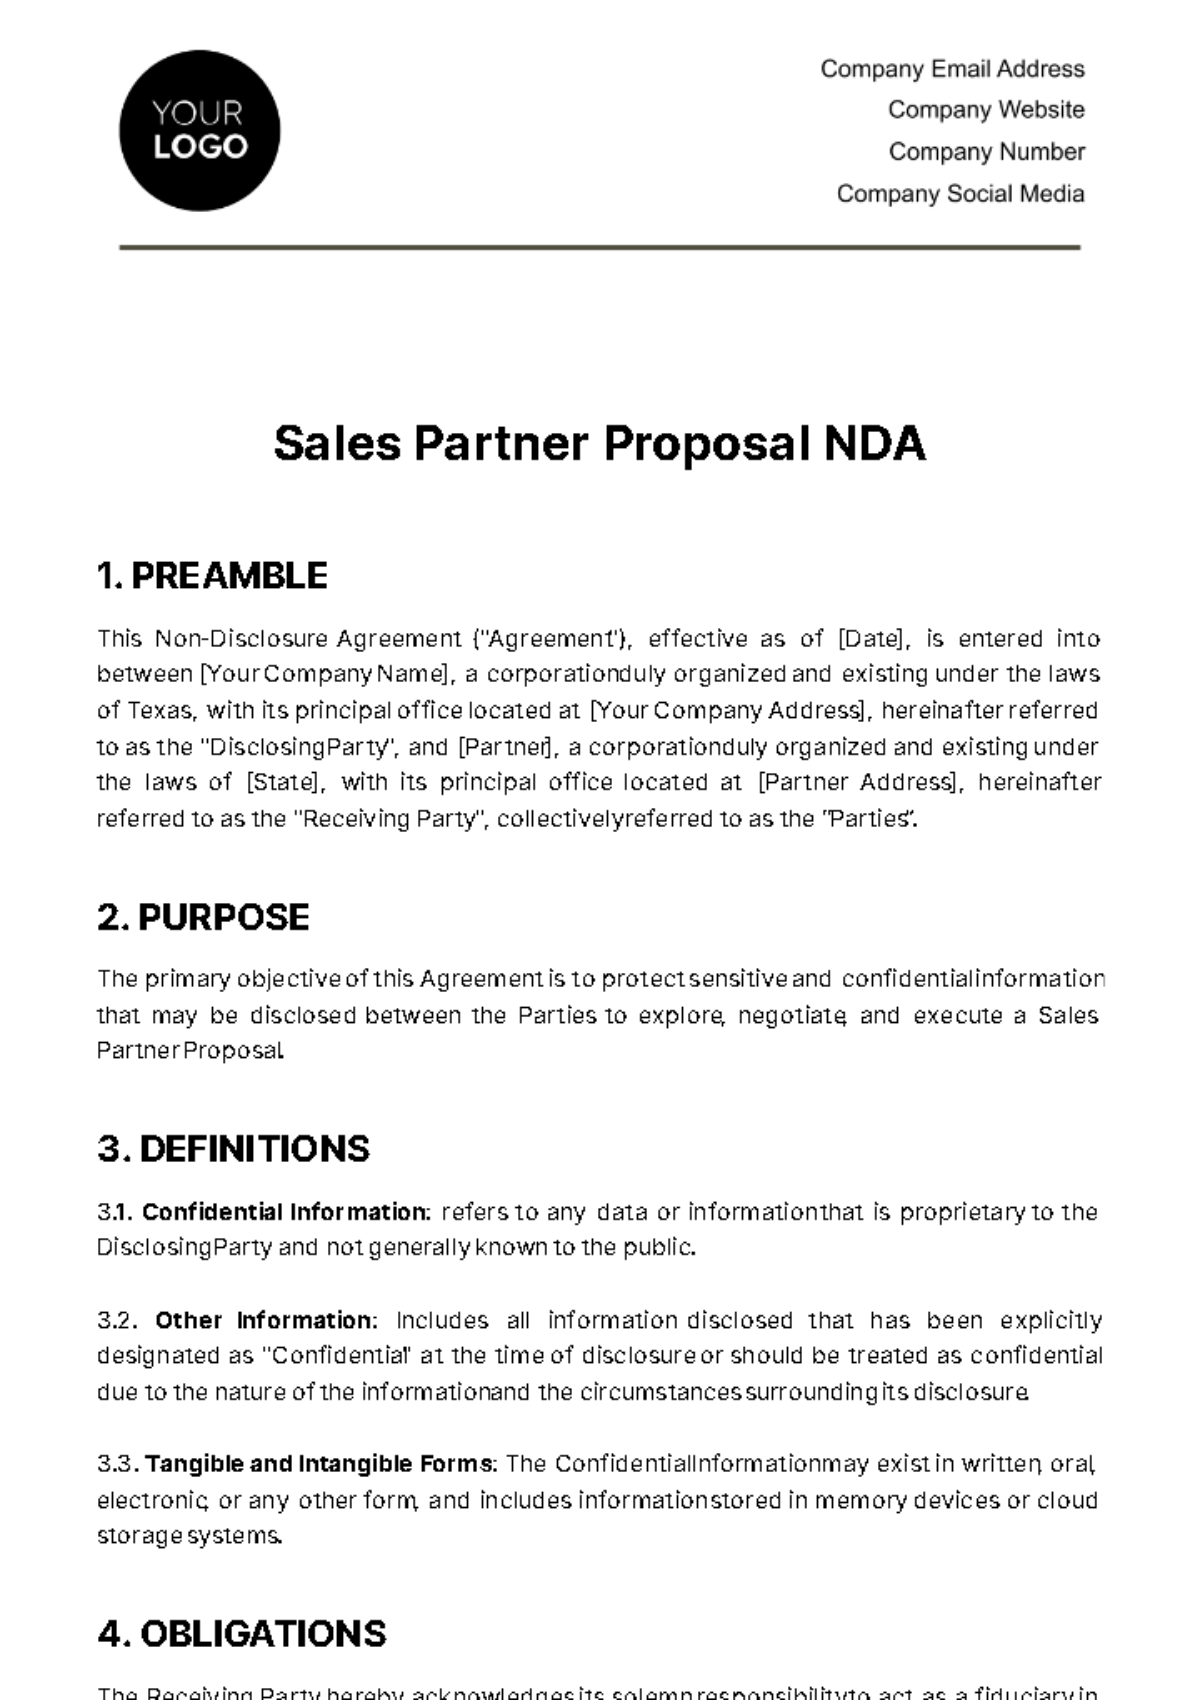 Sales Partner Proposal NDA Template